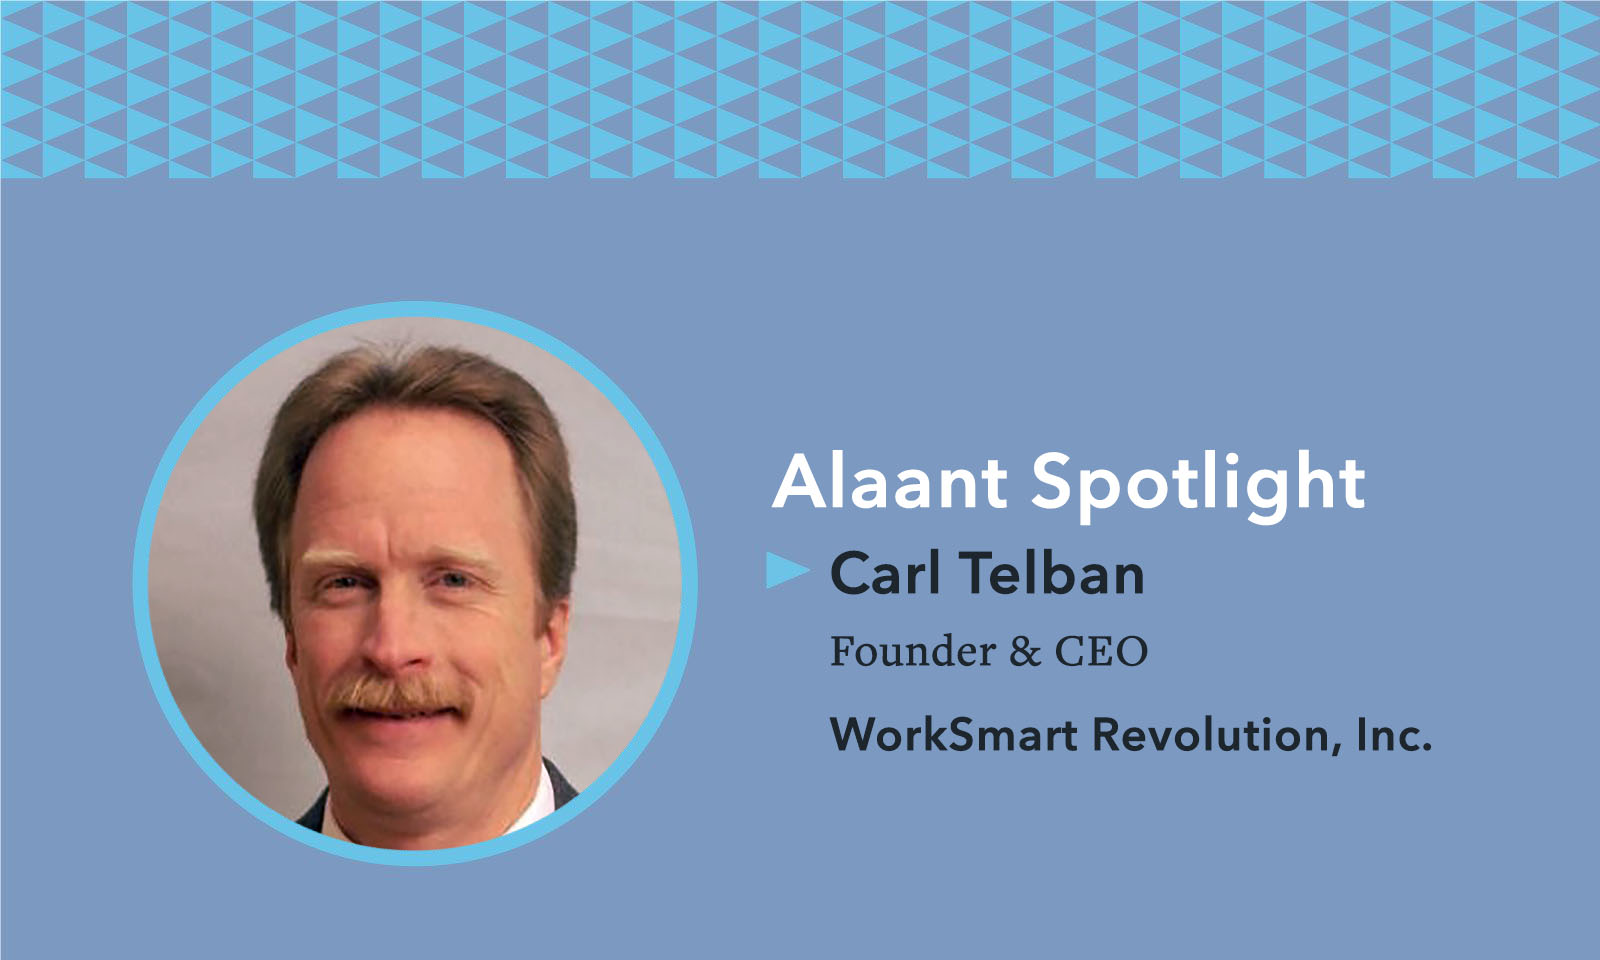 Alaant Spotlight: Carl Telban, Founder & CEO of WorkSmart Revolution, Inc.